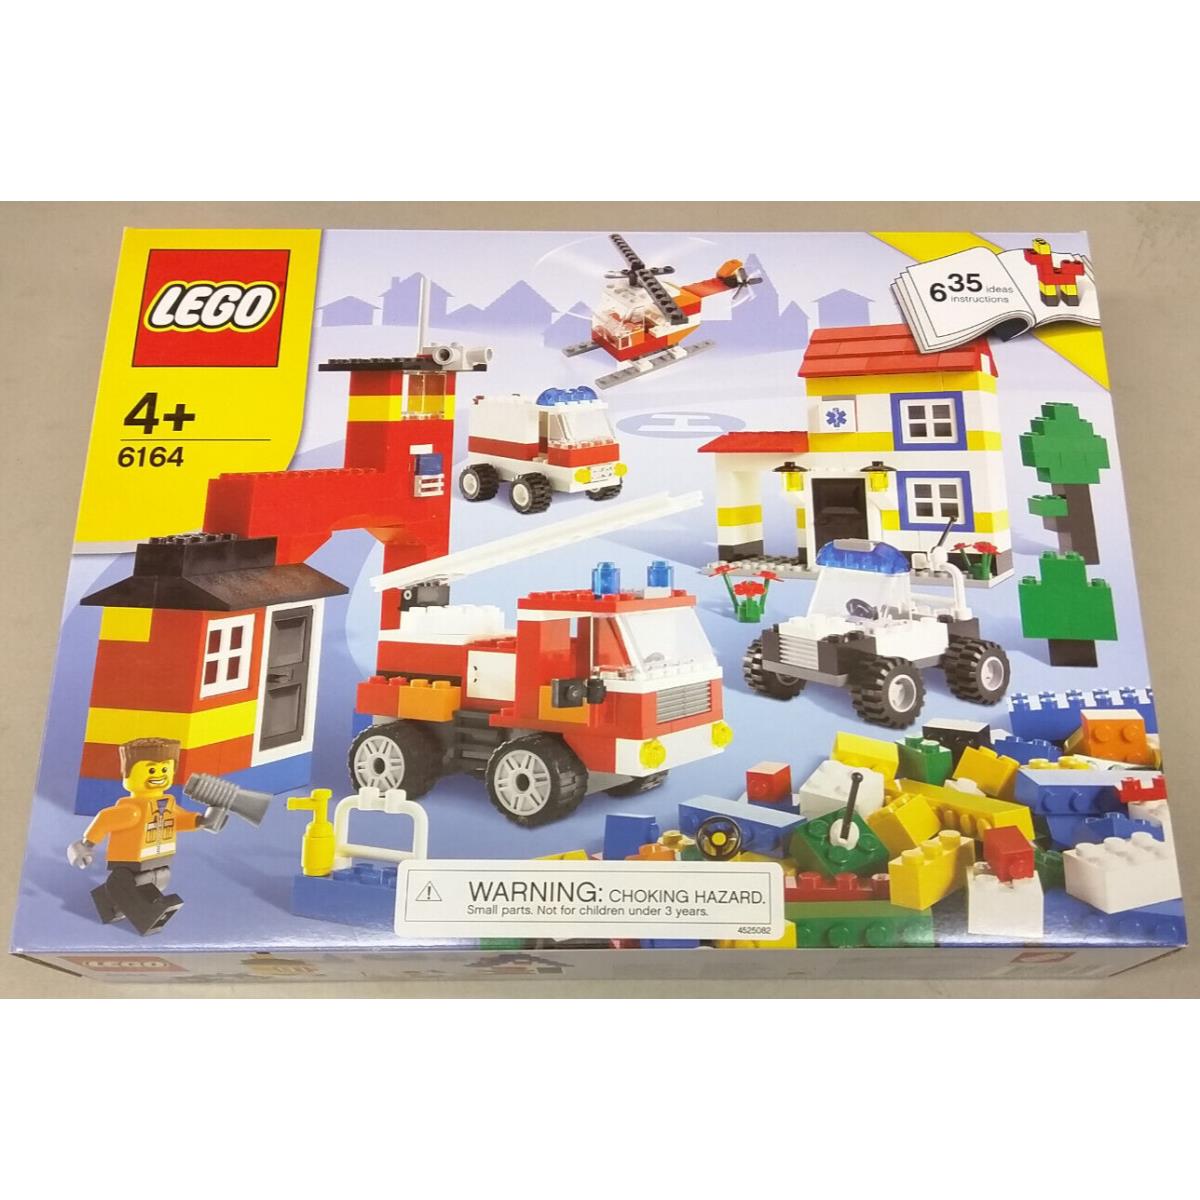 Lego 6164 Emergency Rescue Building Set Police Fire Station Truck Hospital